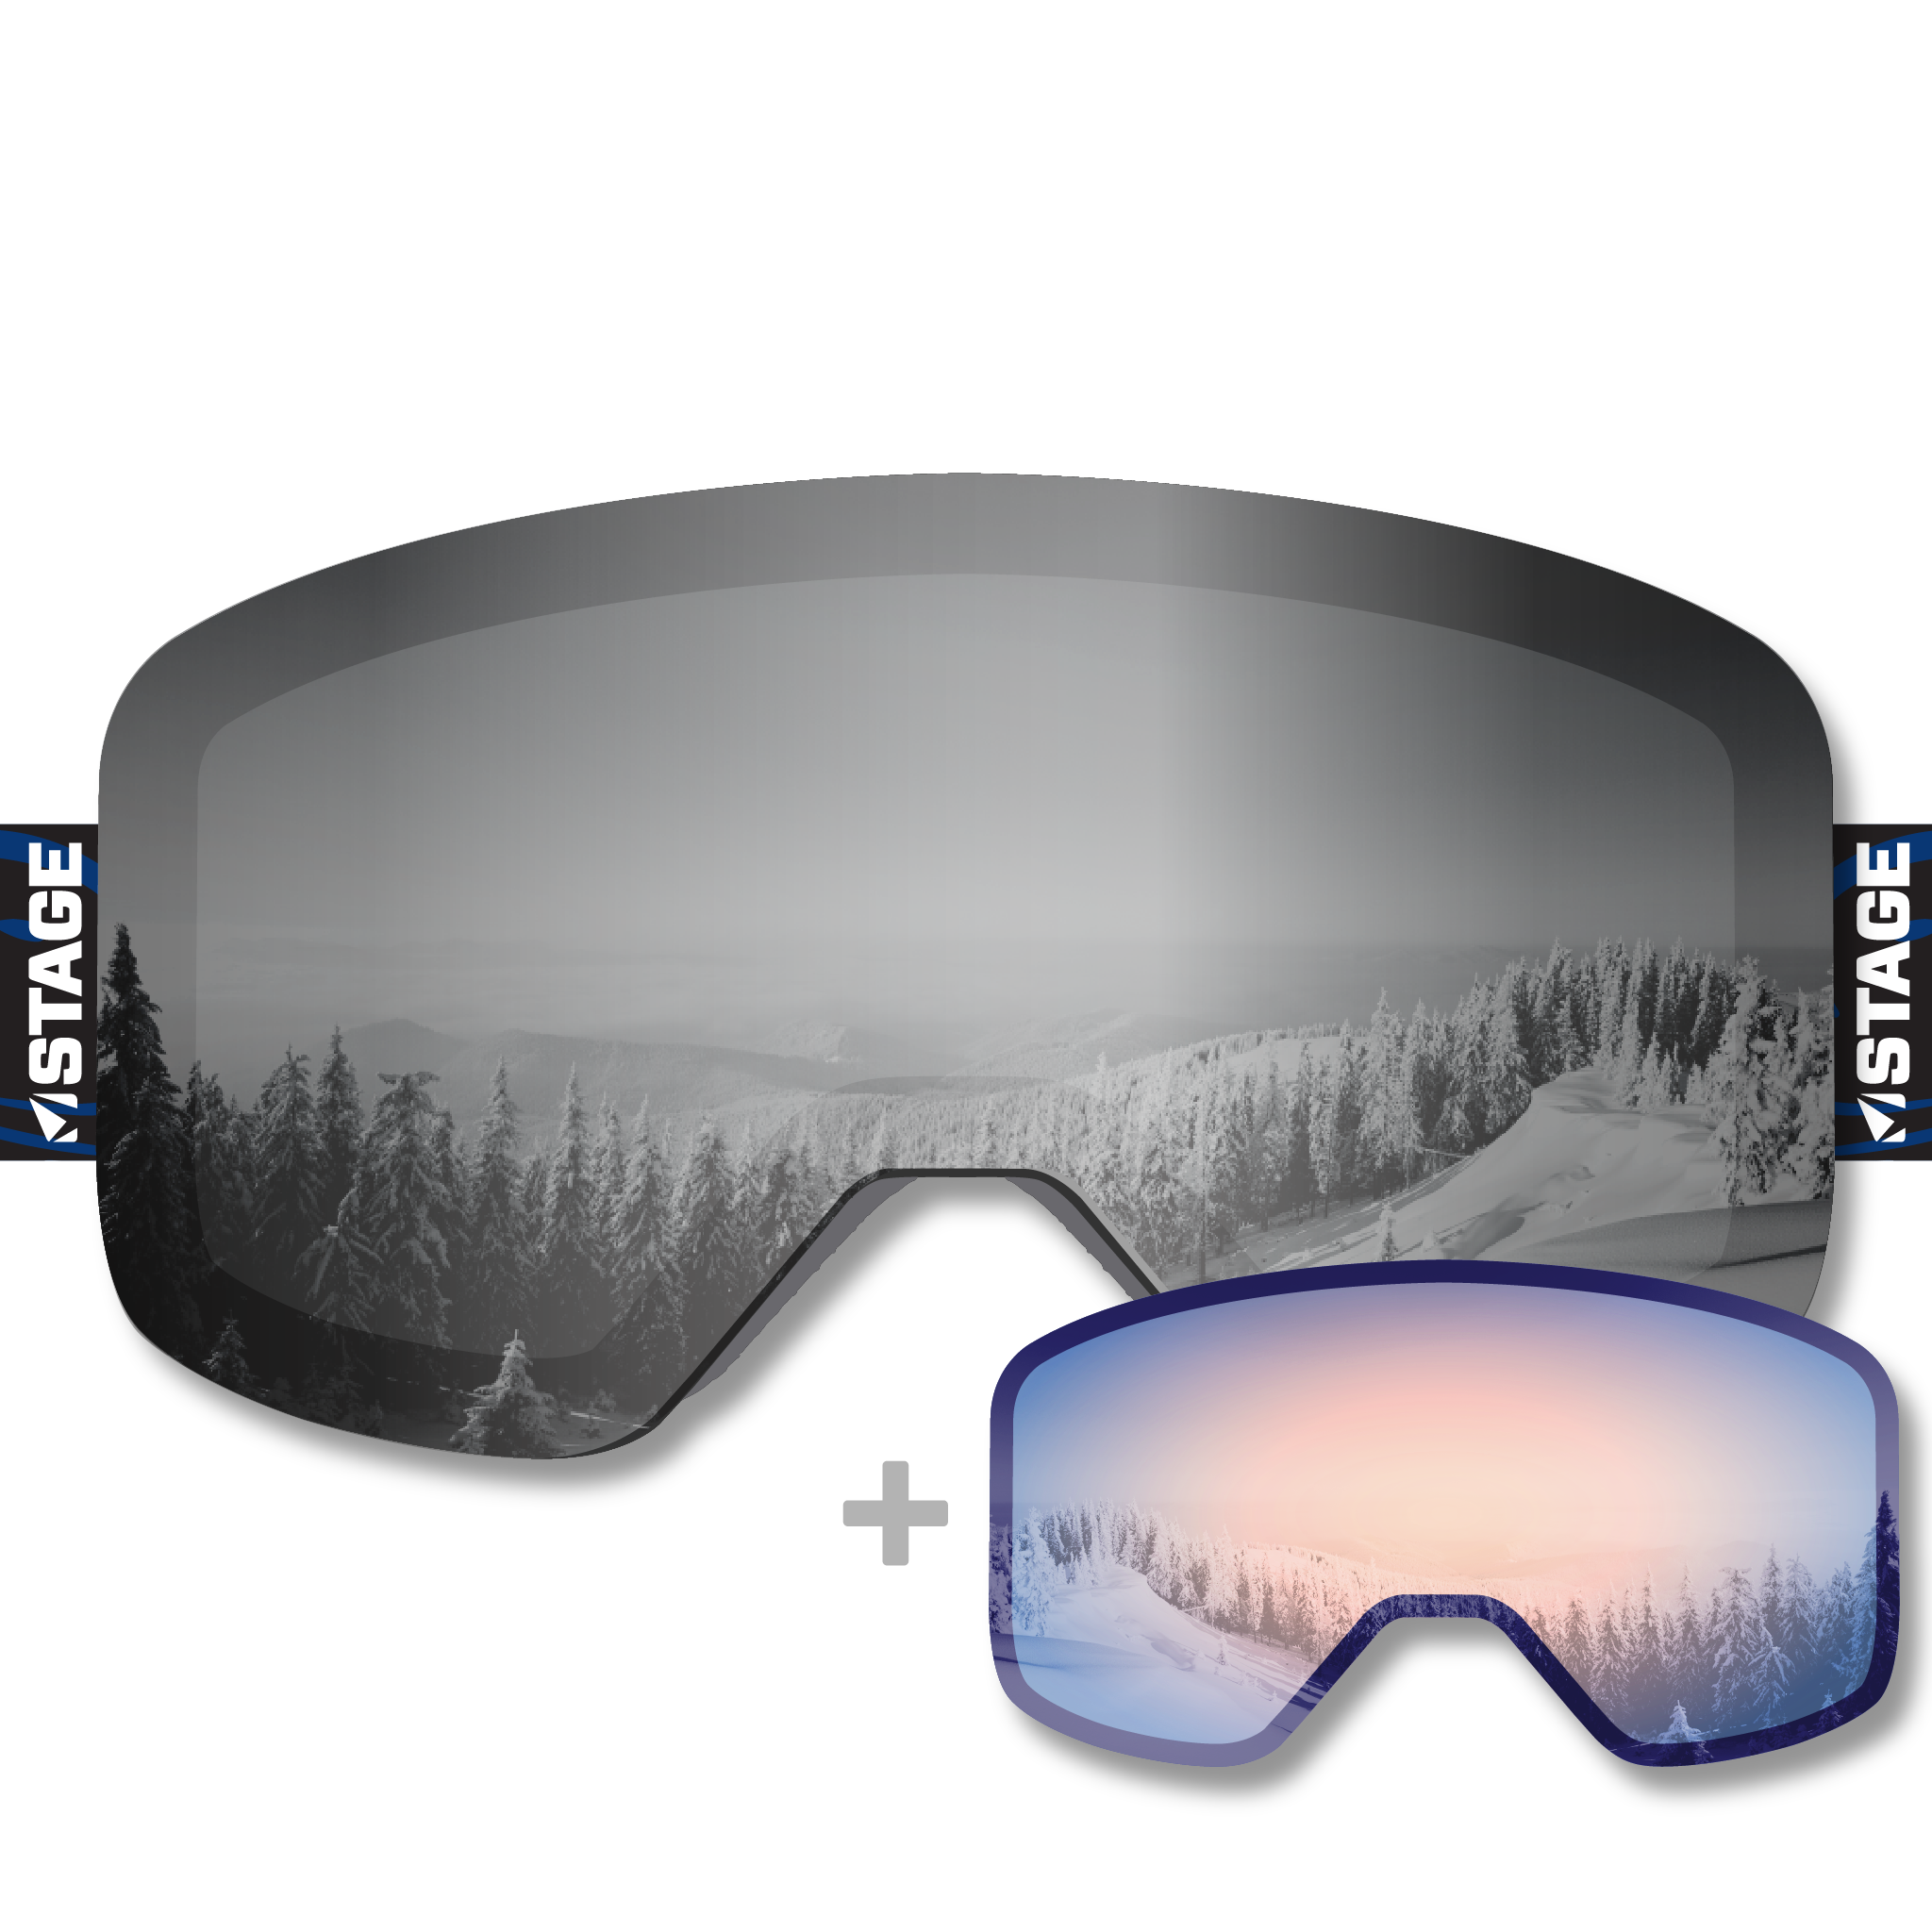 Achieve Tahoe Propnetic - Magnetic Ski Goggle + Bonus Lens